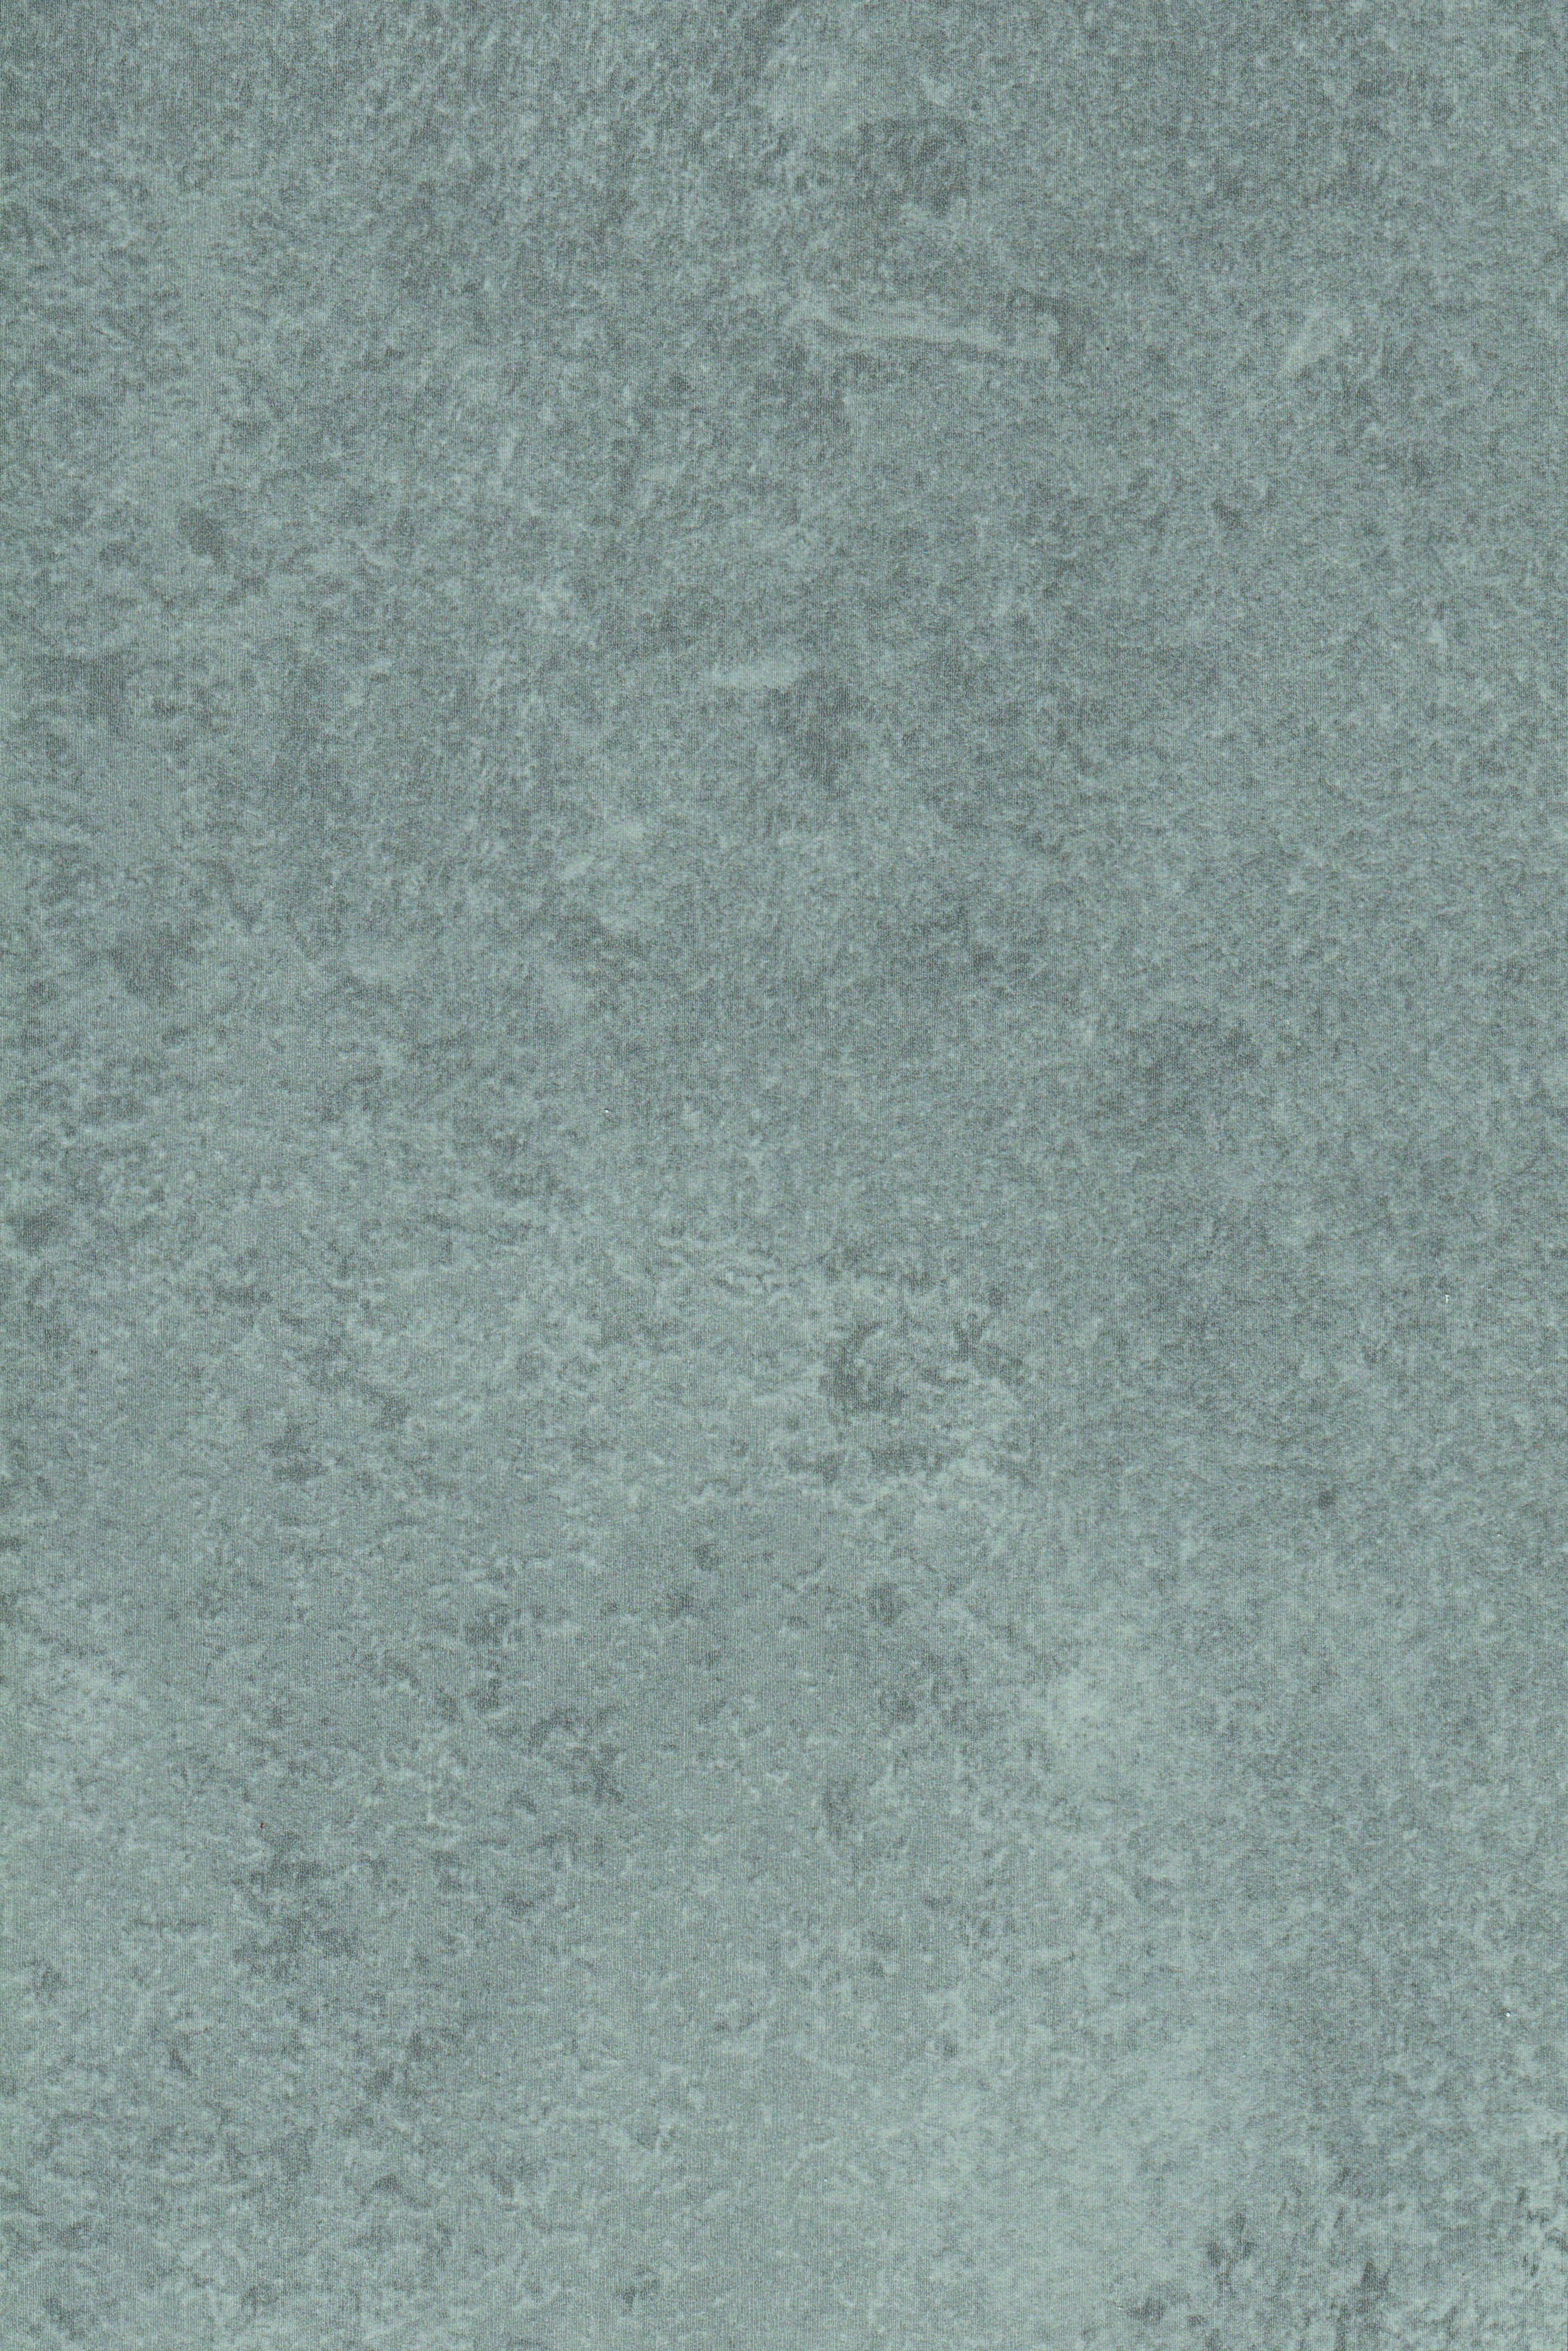 d-c-fix Dekofolie Avellino stone beige B/L: ca. 45x200 cm Dekofolie_d-c-fix_F3460655 - beige (45,00/200,00cm)